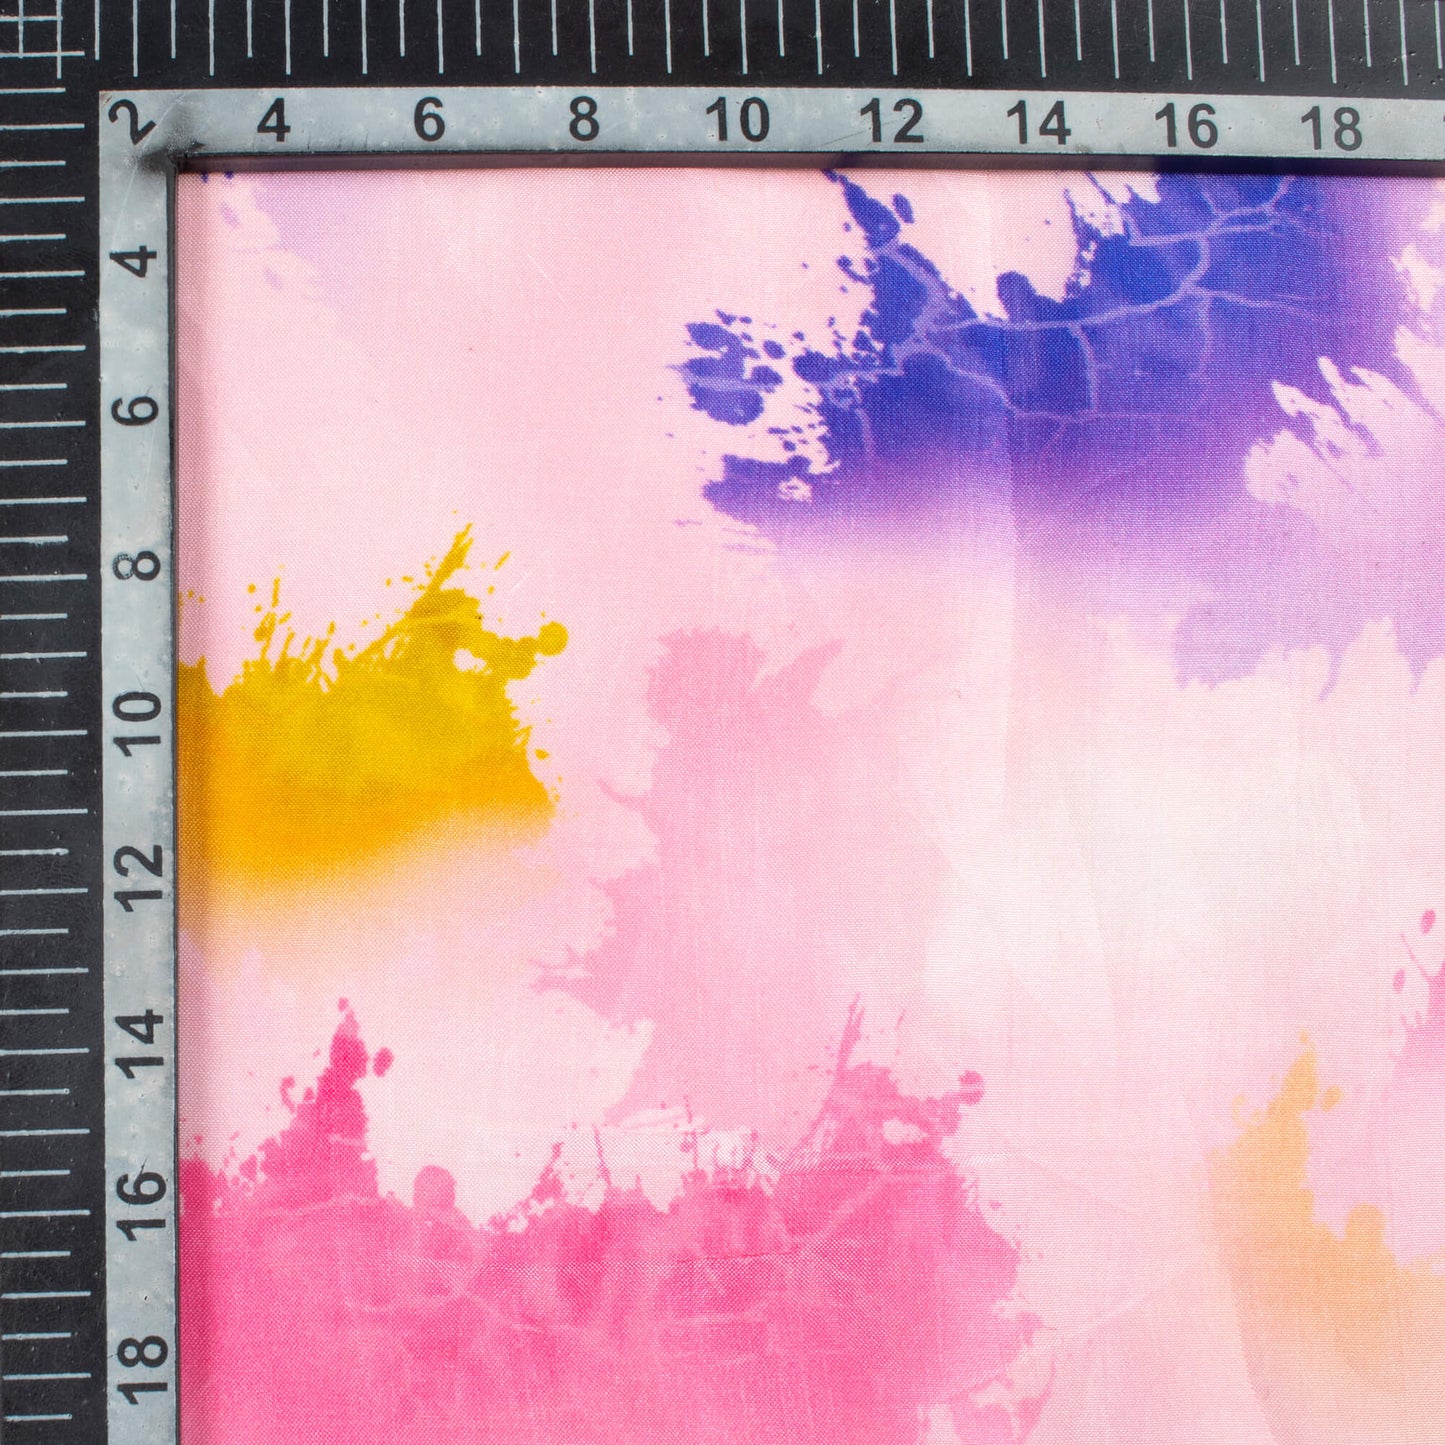 Taffy Pink And Grape Purple Tie And Dye Pattern Digital Print Viscose Uppada Silk Fabric